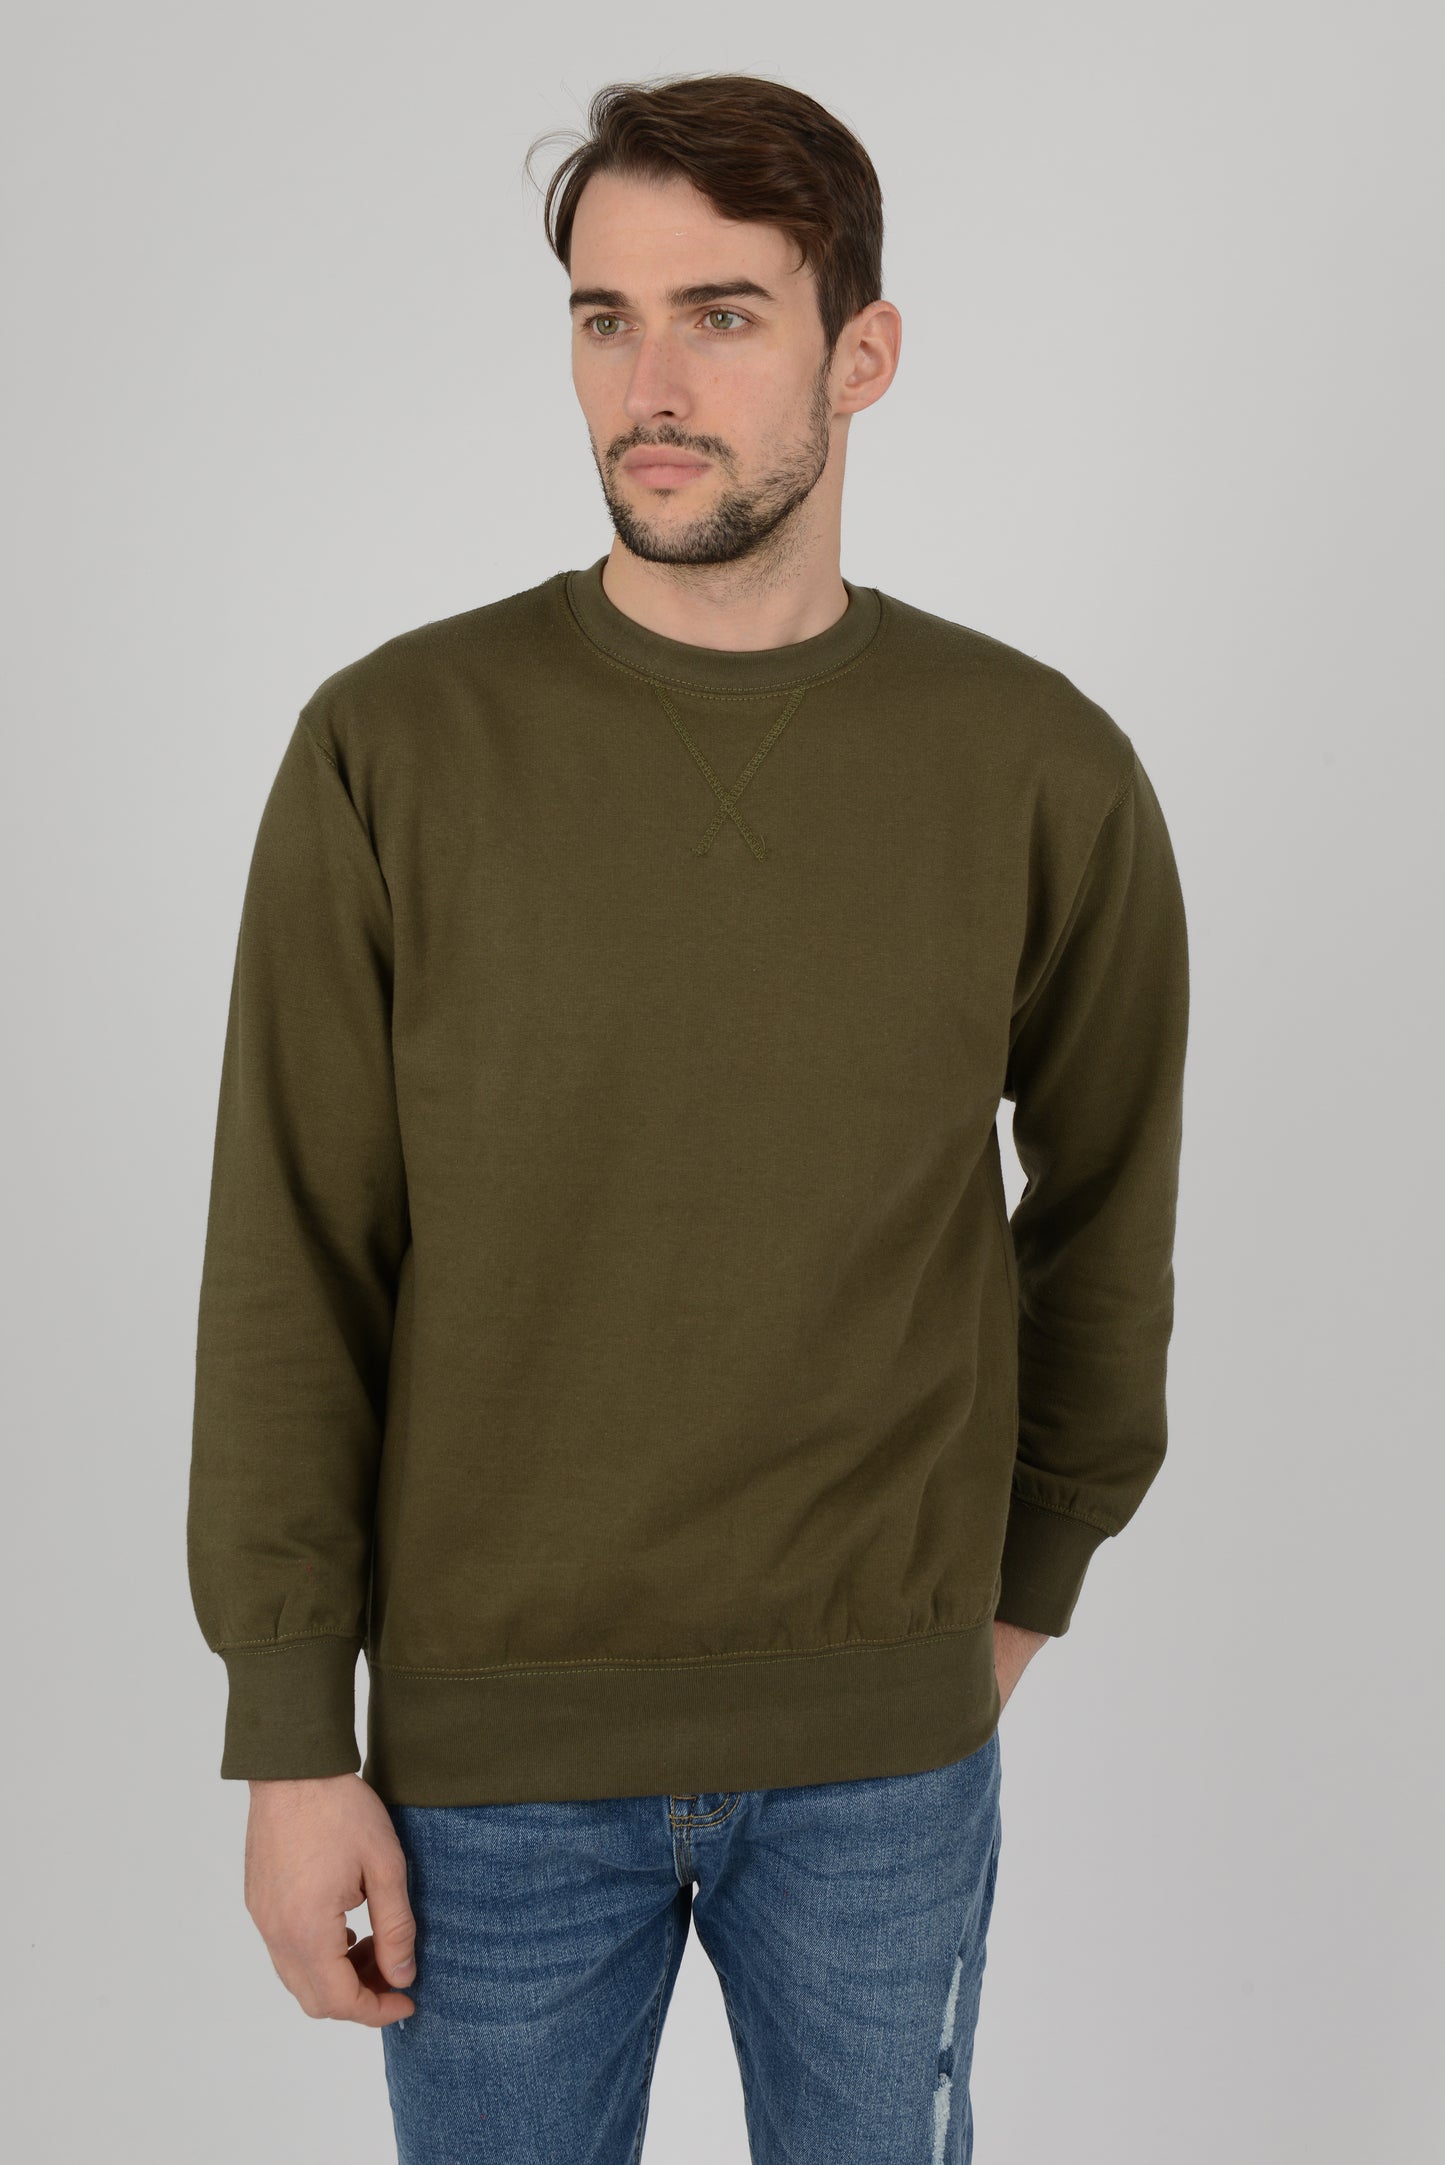 Mens-Plain-Fleece-Sweatshirt-Jersey-Olive-Green